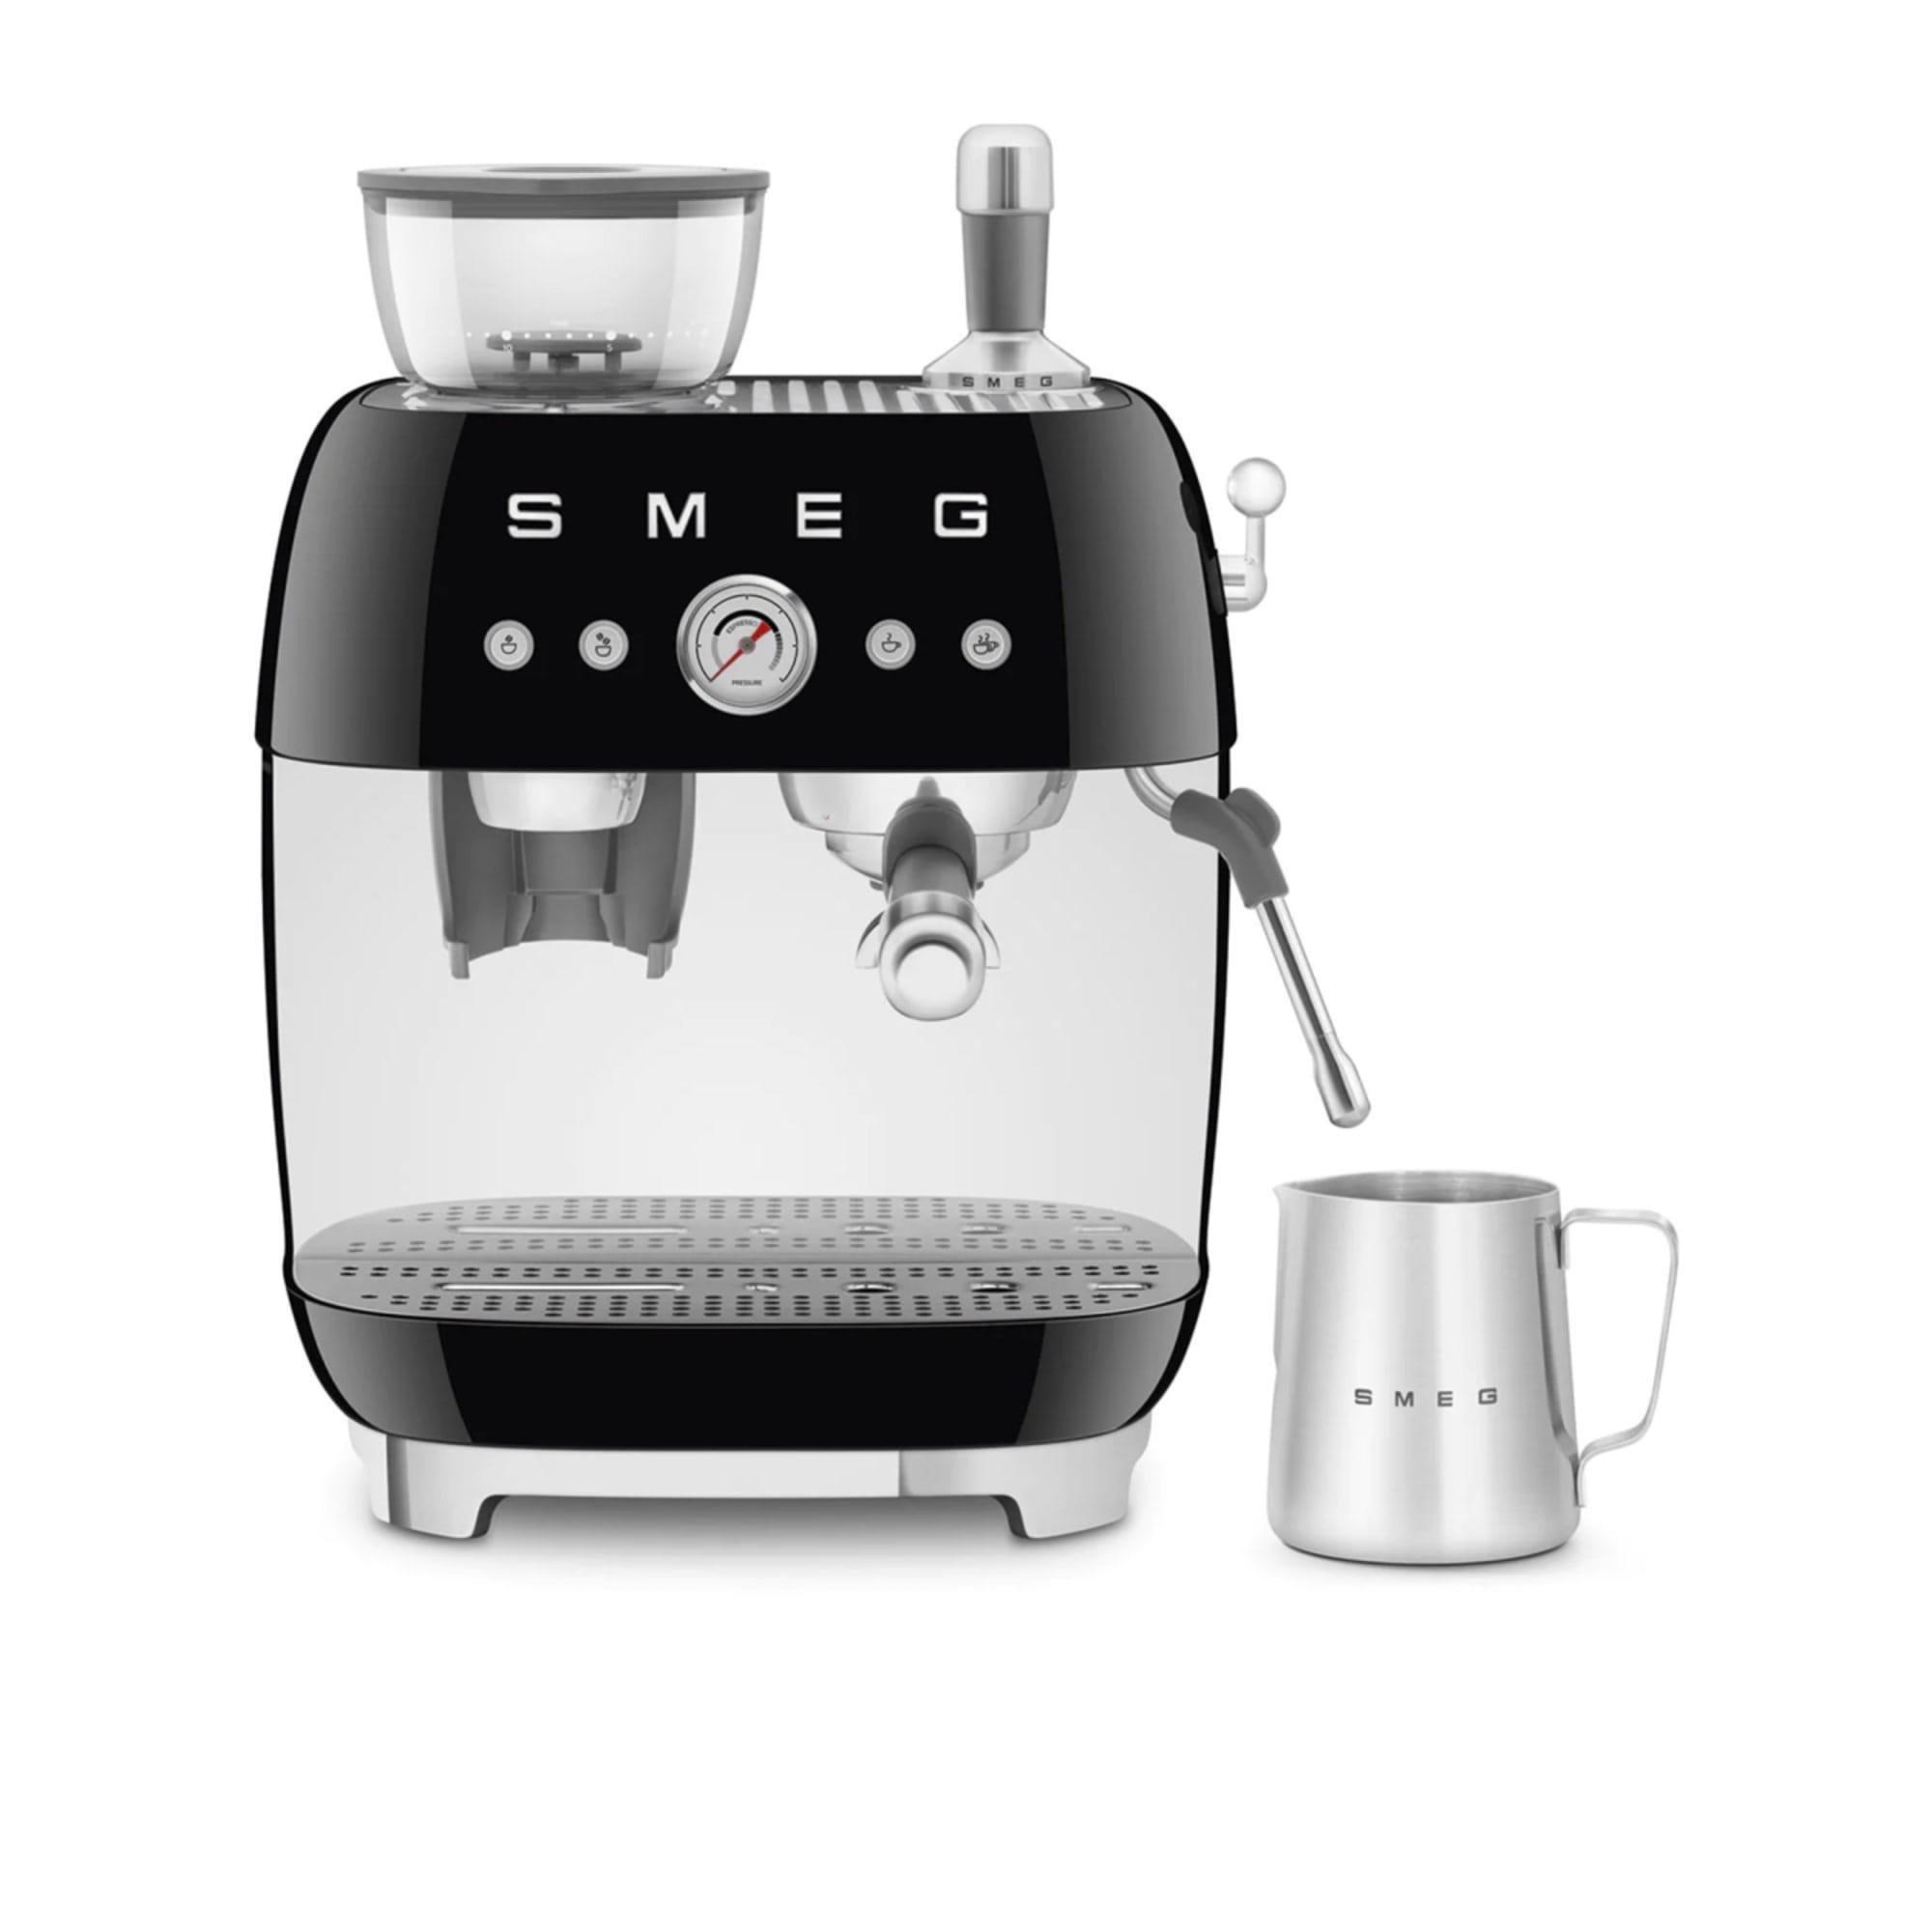 Smeg 50's Retro Style Espresso Machine with Built In Grinder Black Image 6